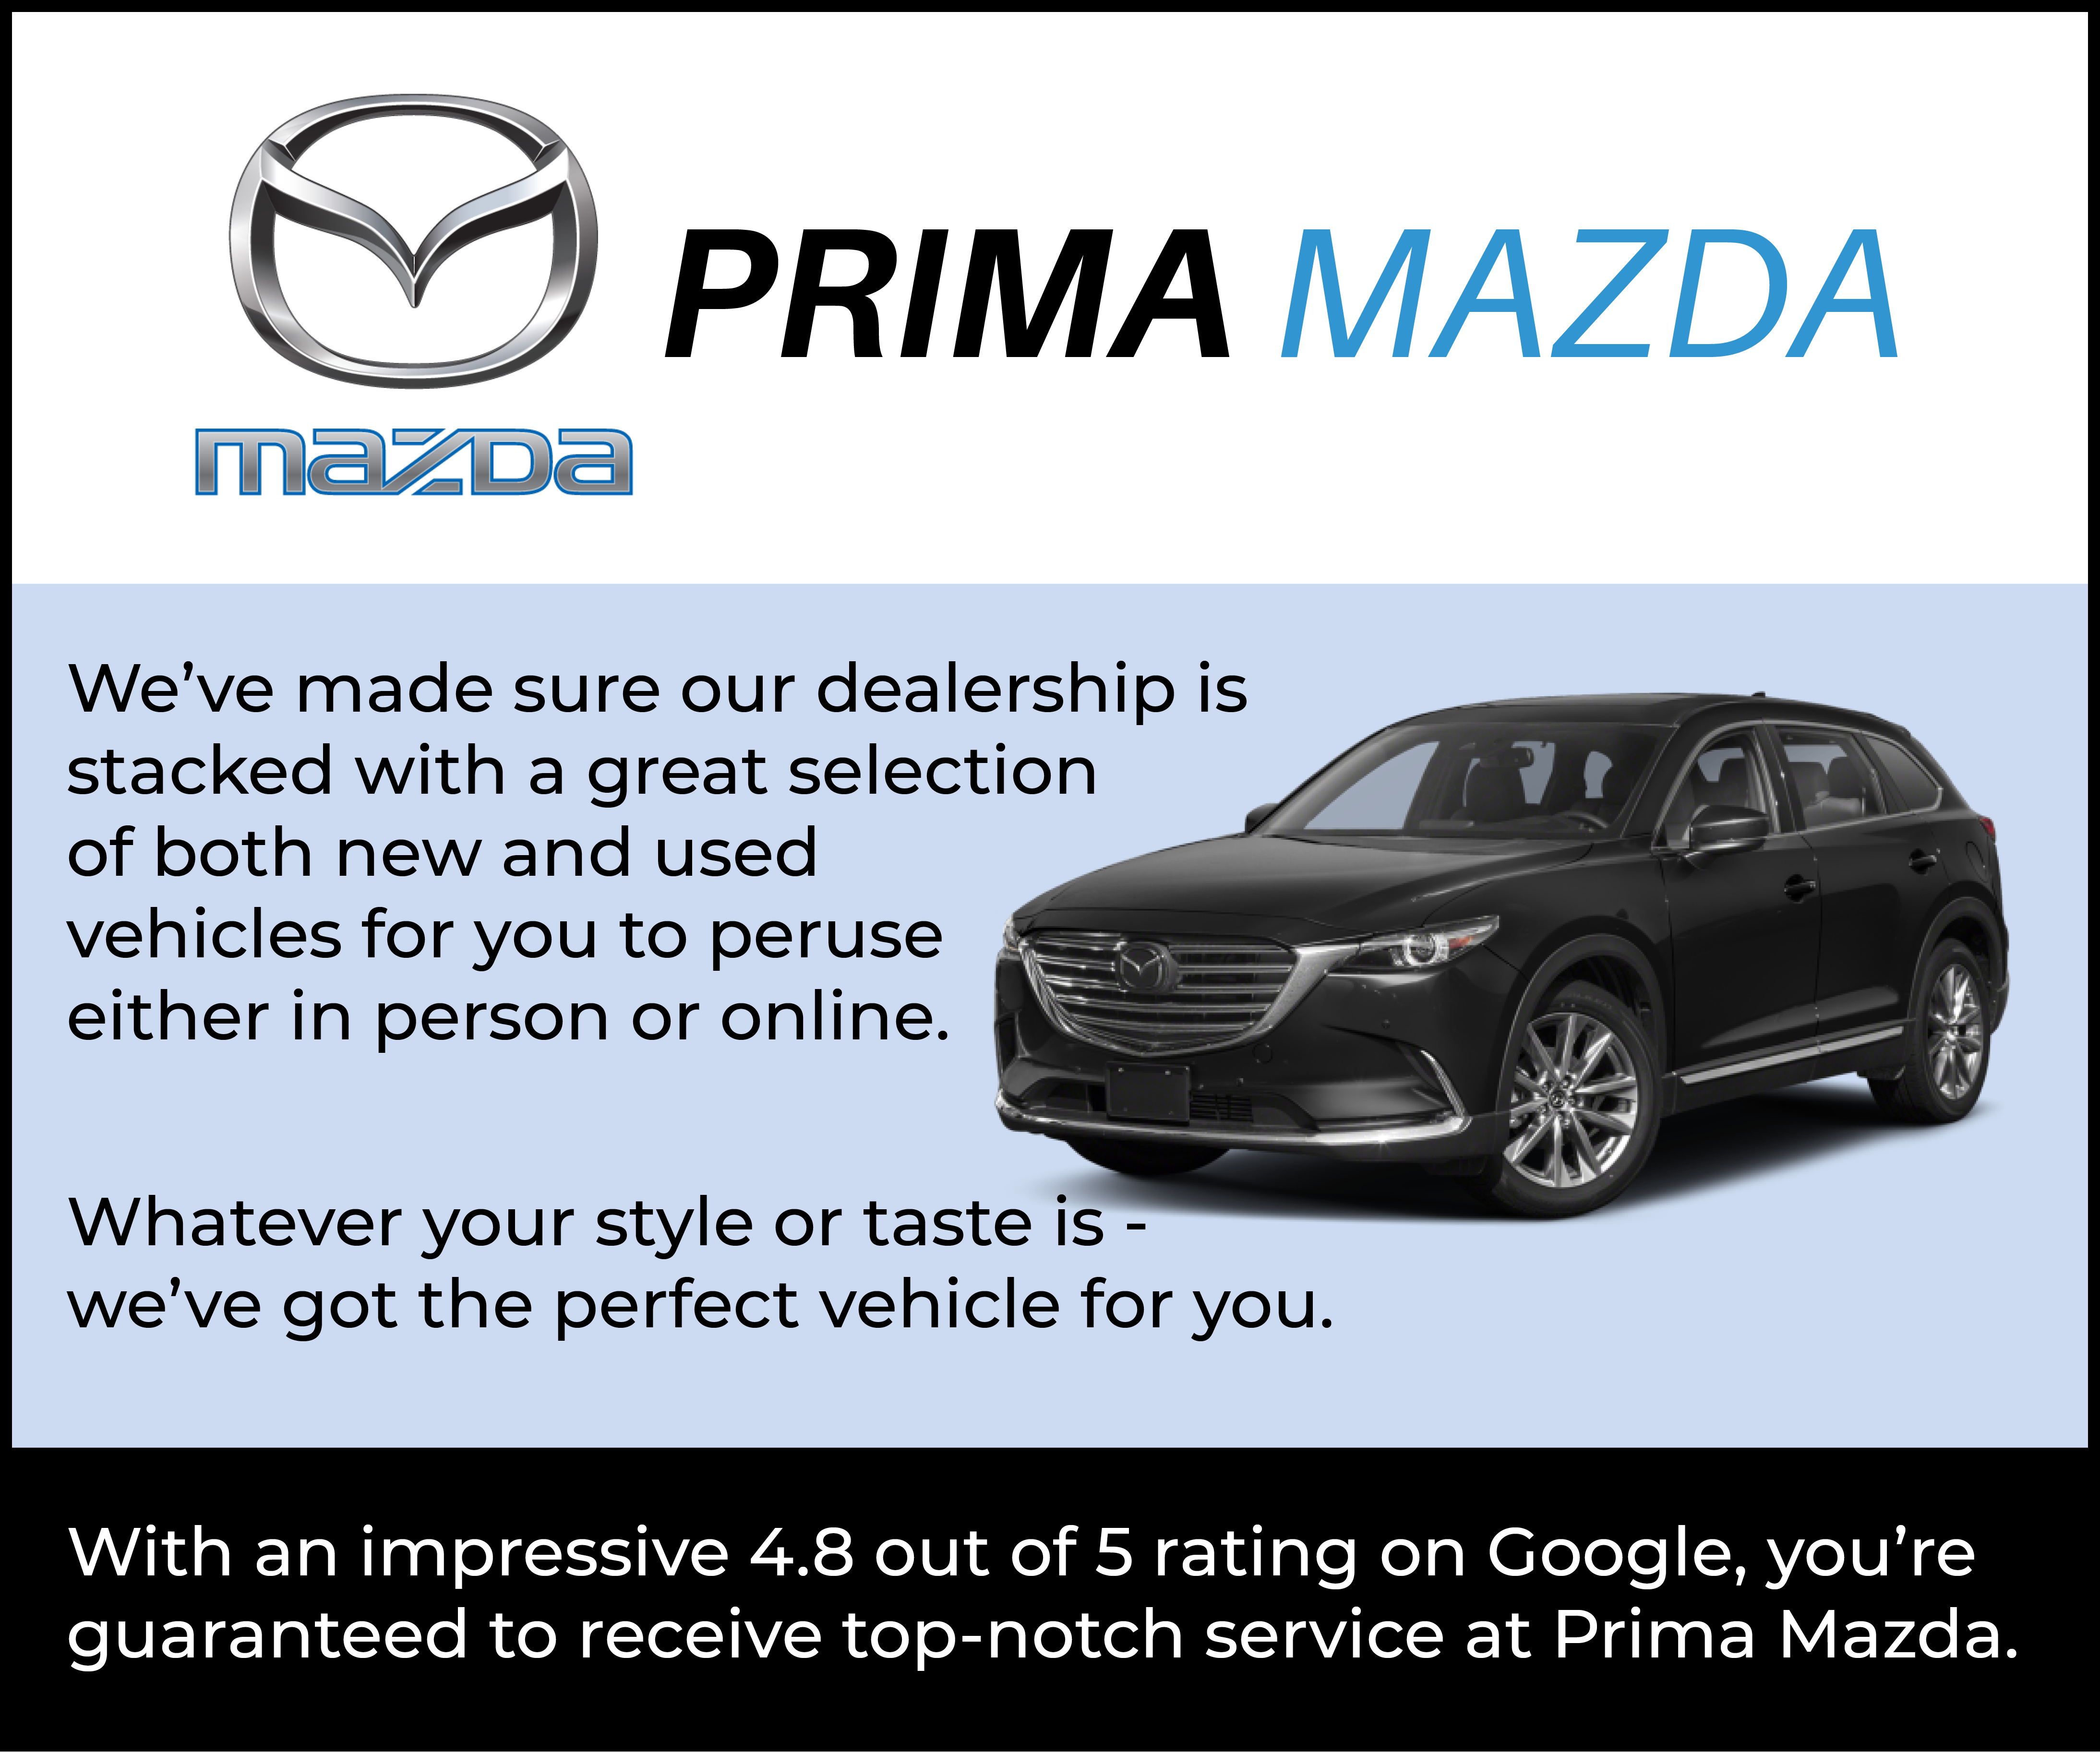 More from Prima Mazda